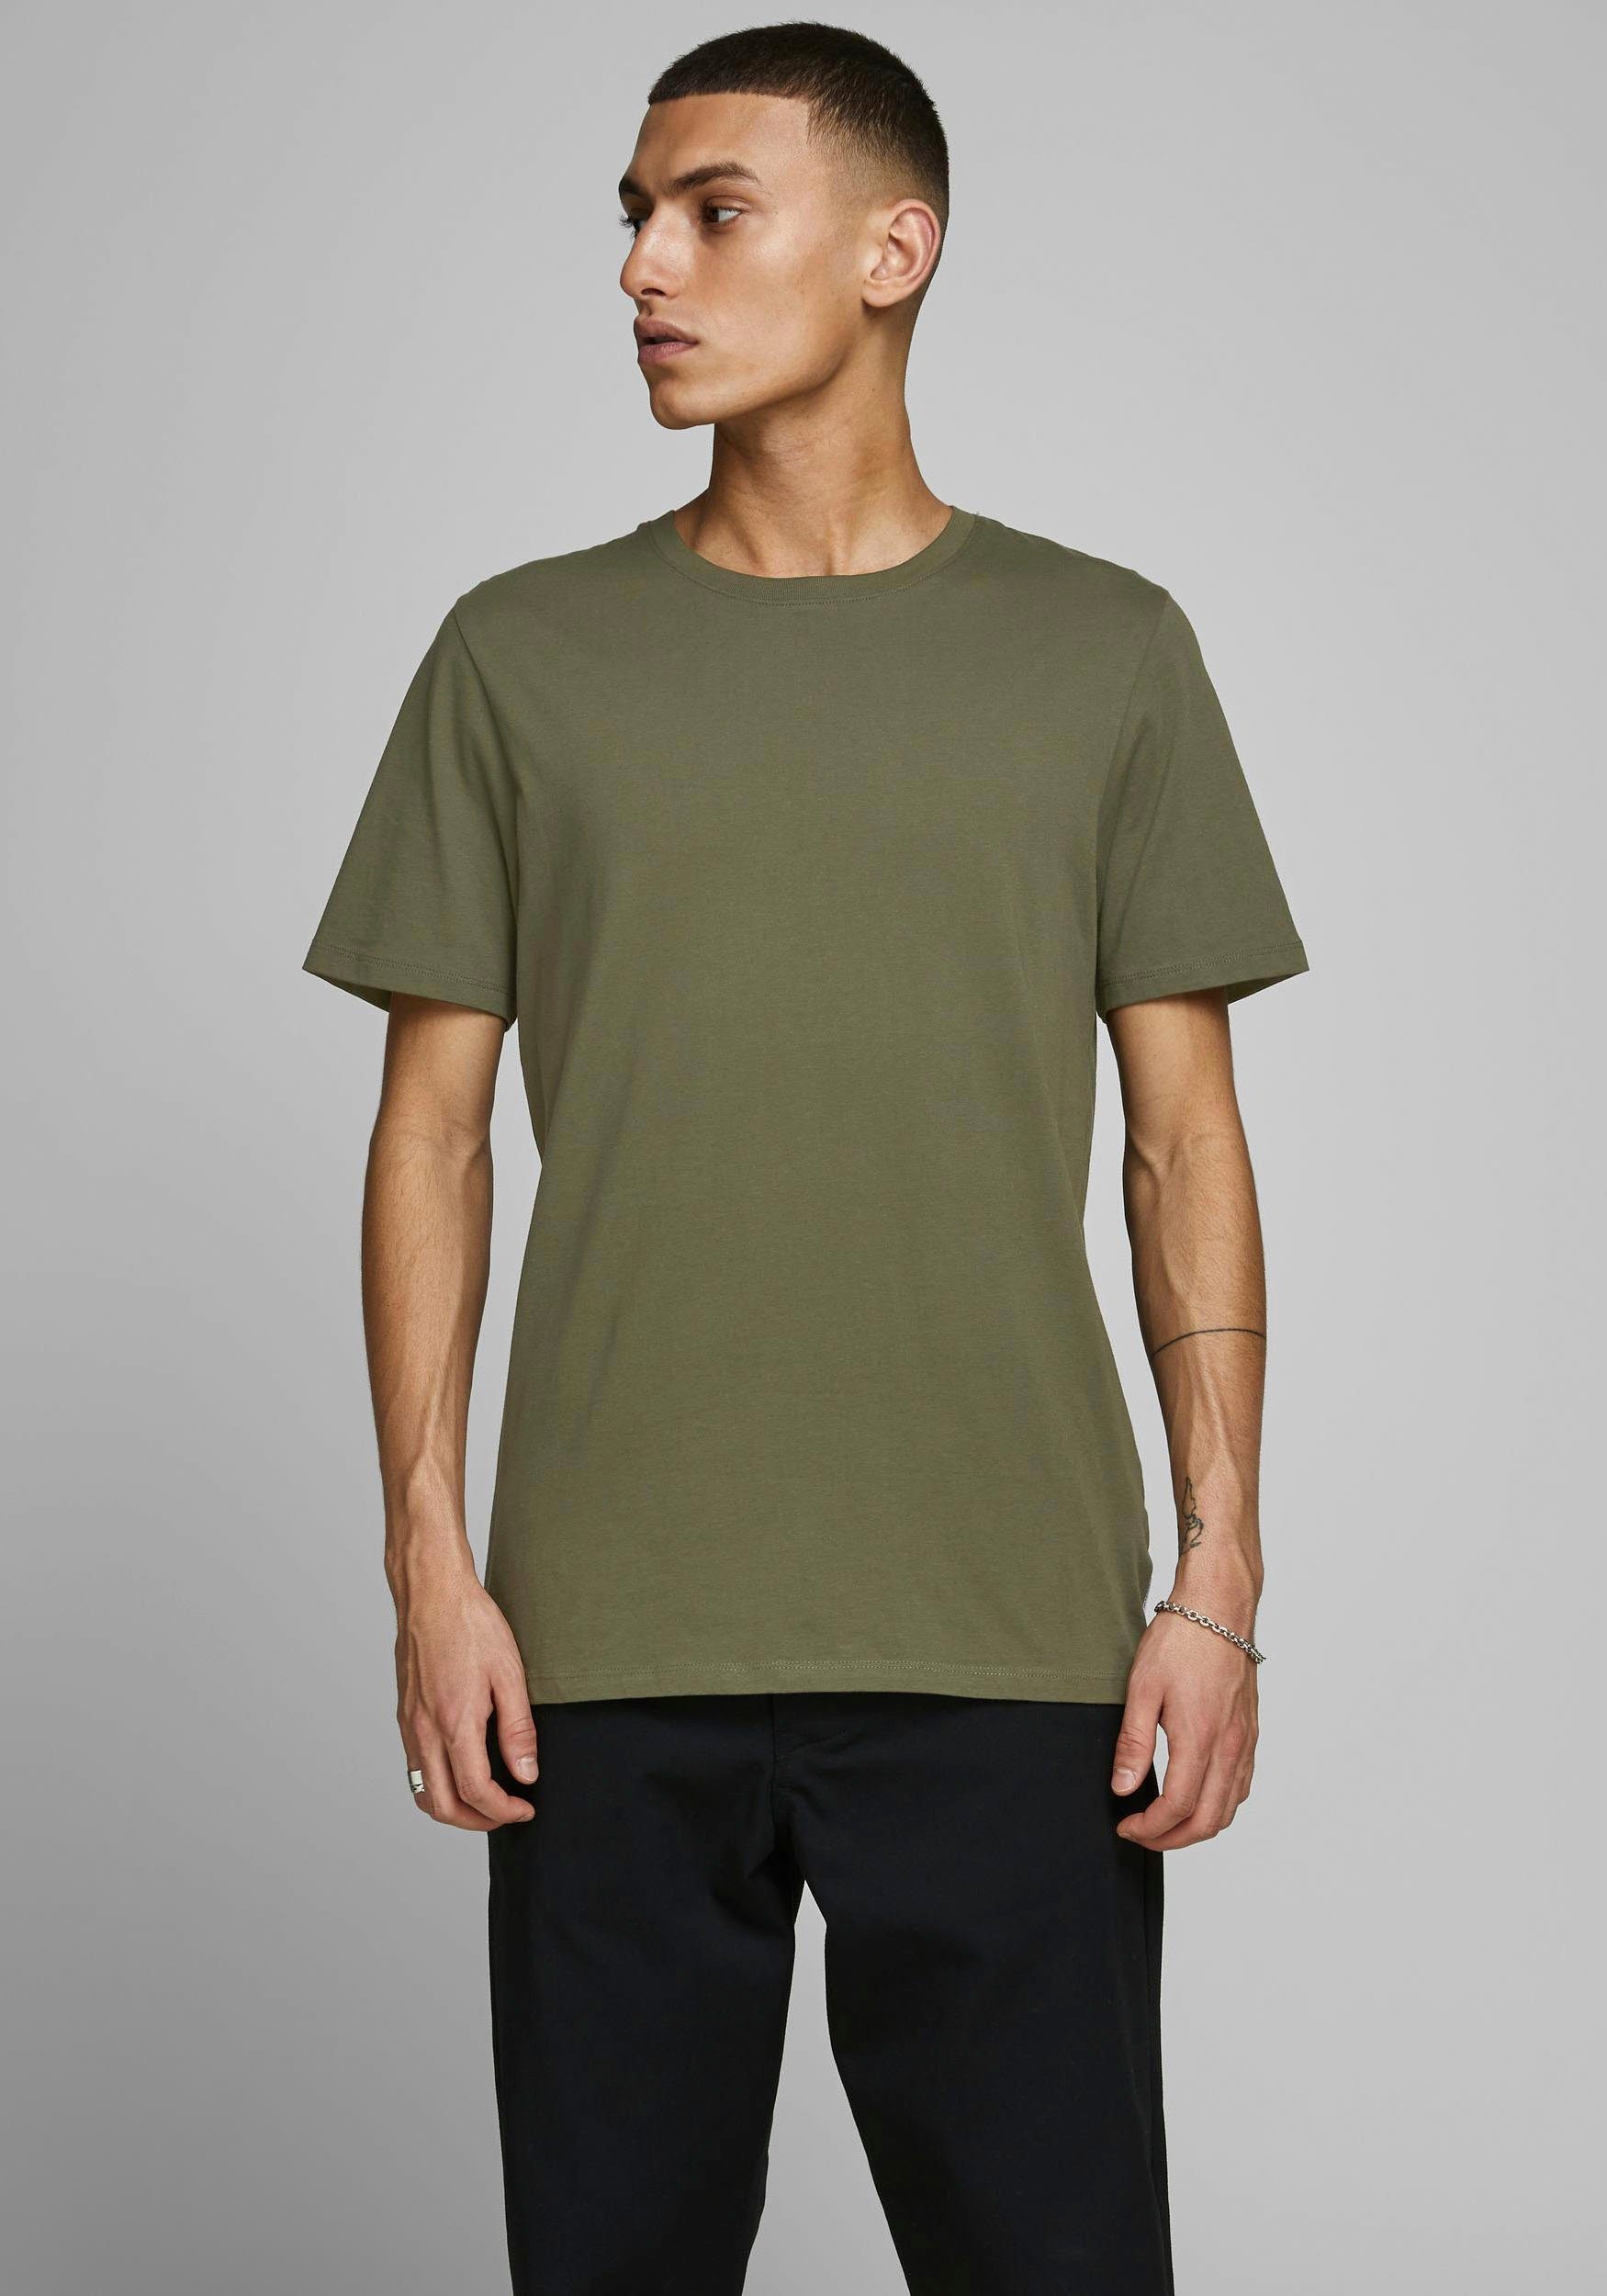 Jack & Jones T-Shirt ORGANIC olivgrün TEE BASIC